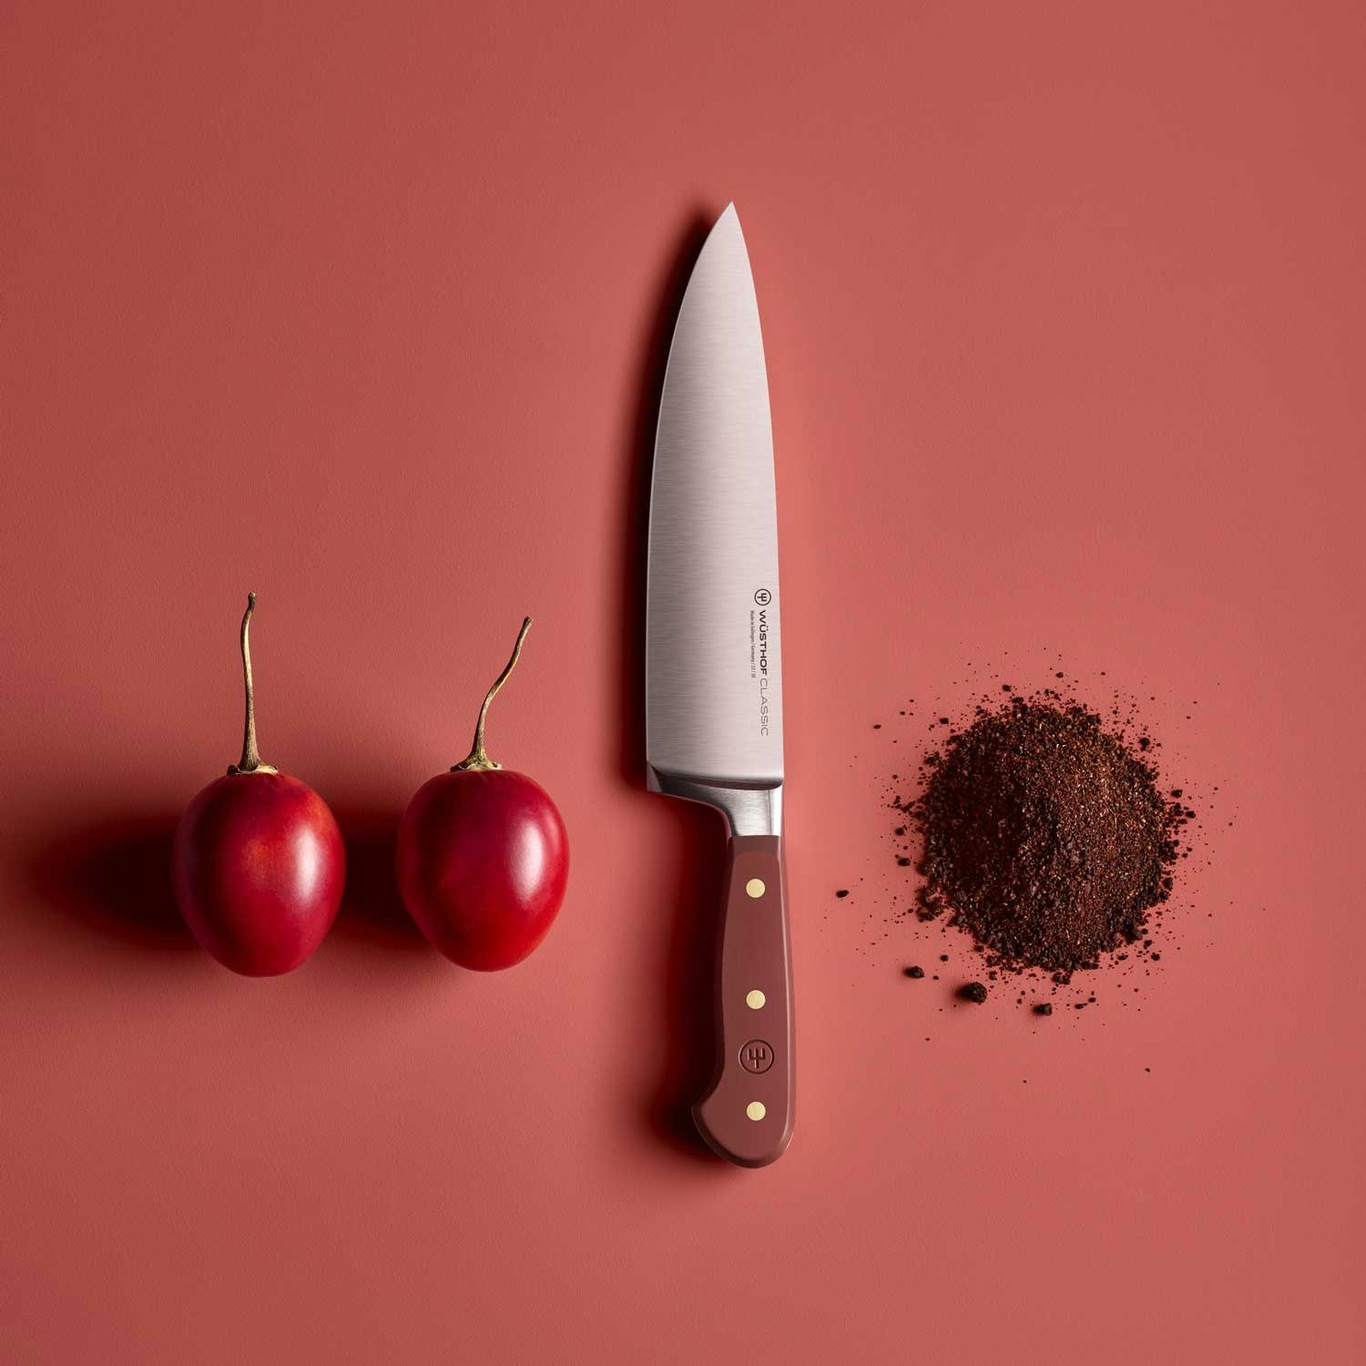 https://royaldesign.com/image/2/wusthof-classic-colour-chef-knife-20-cm-33?w=800&quality=80